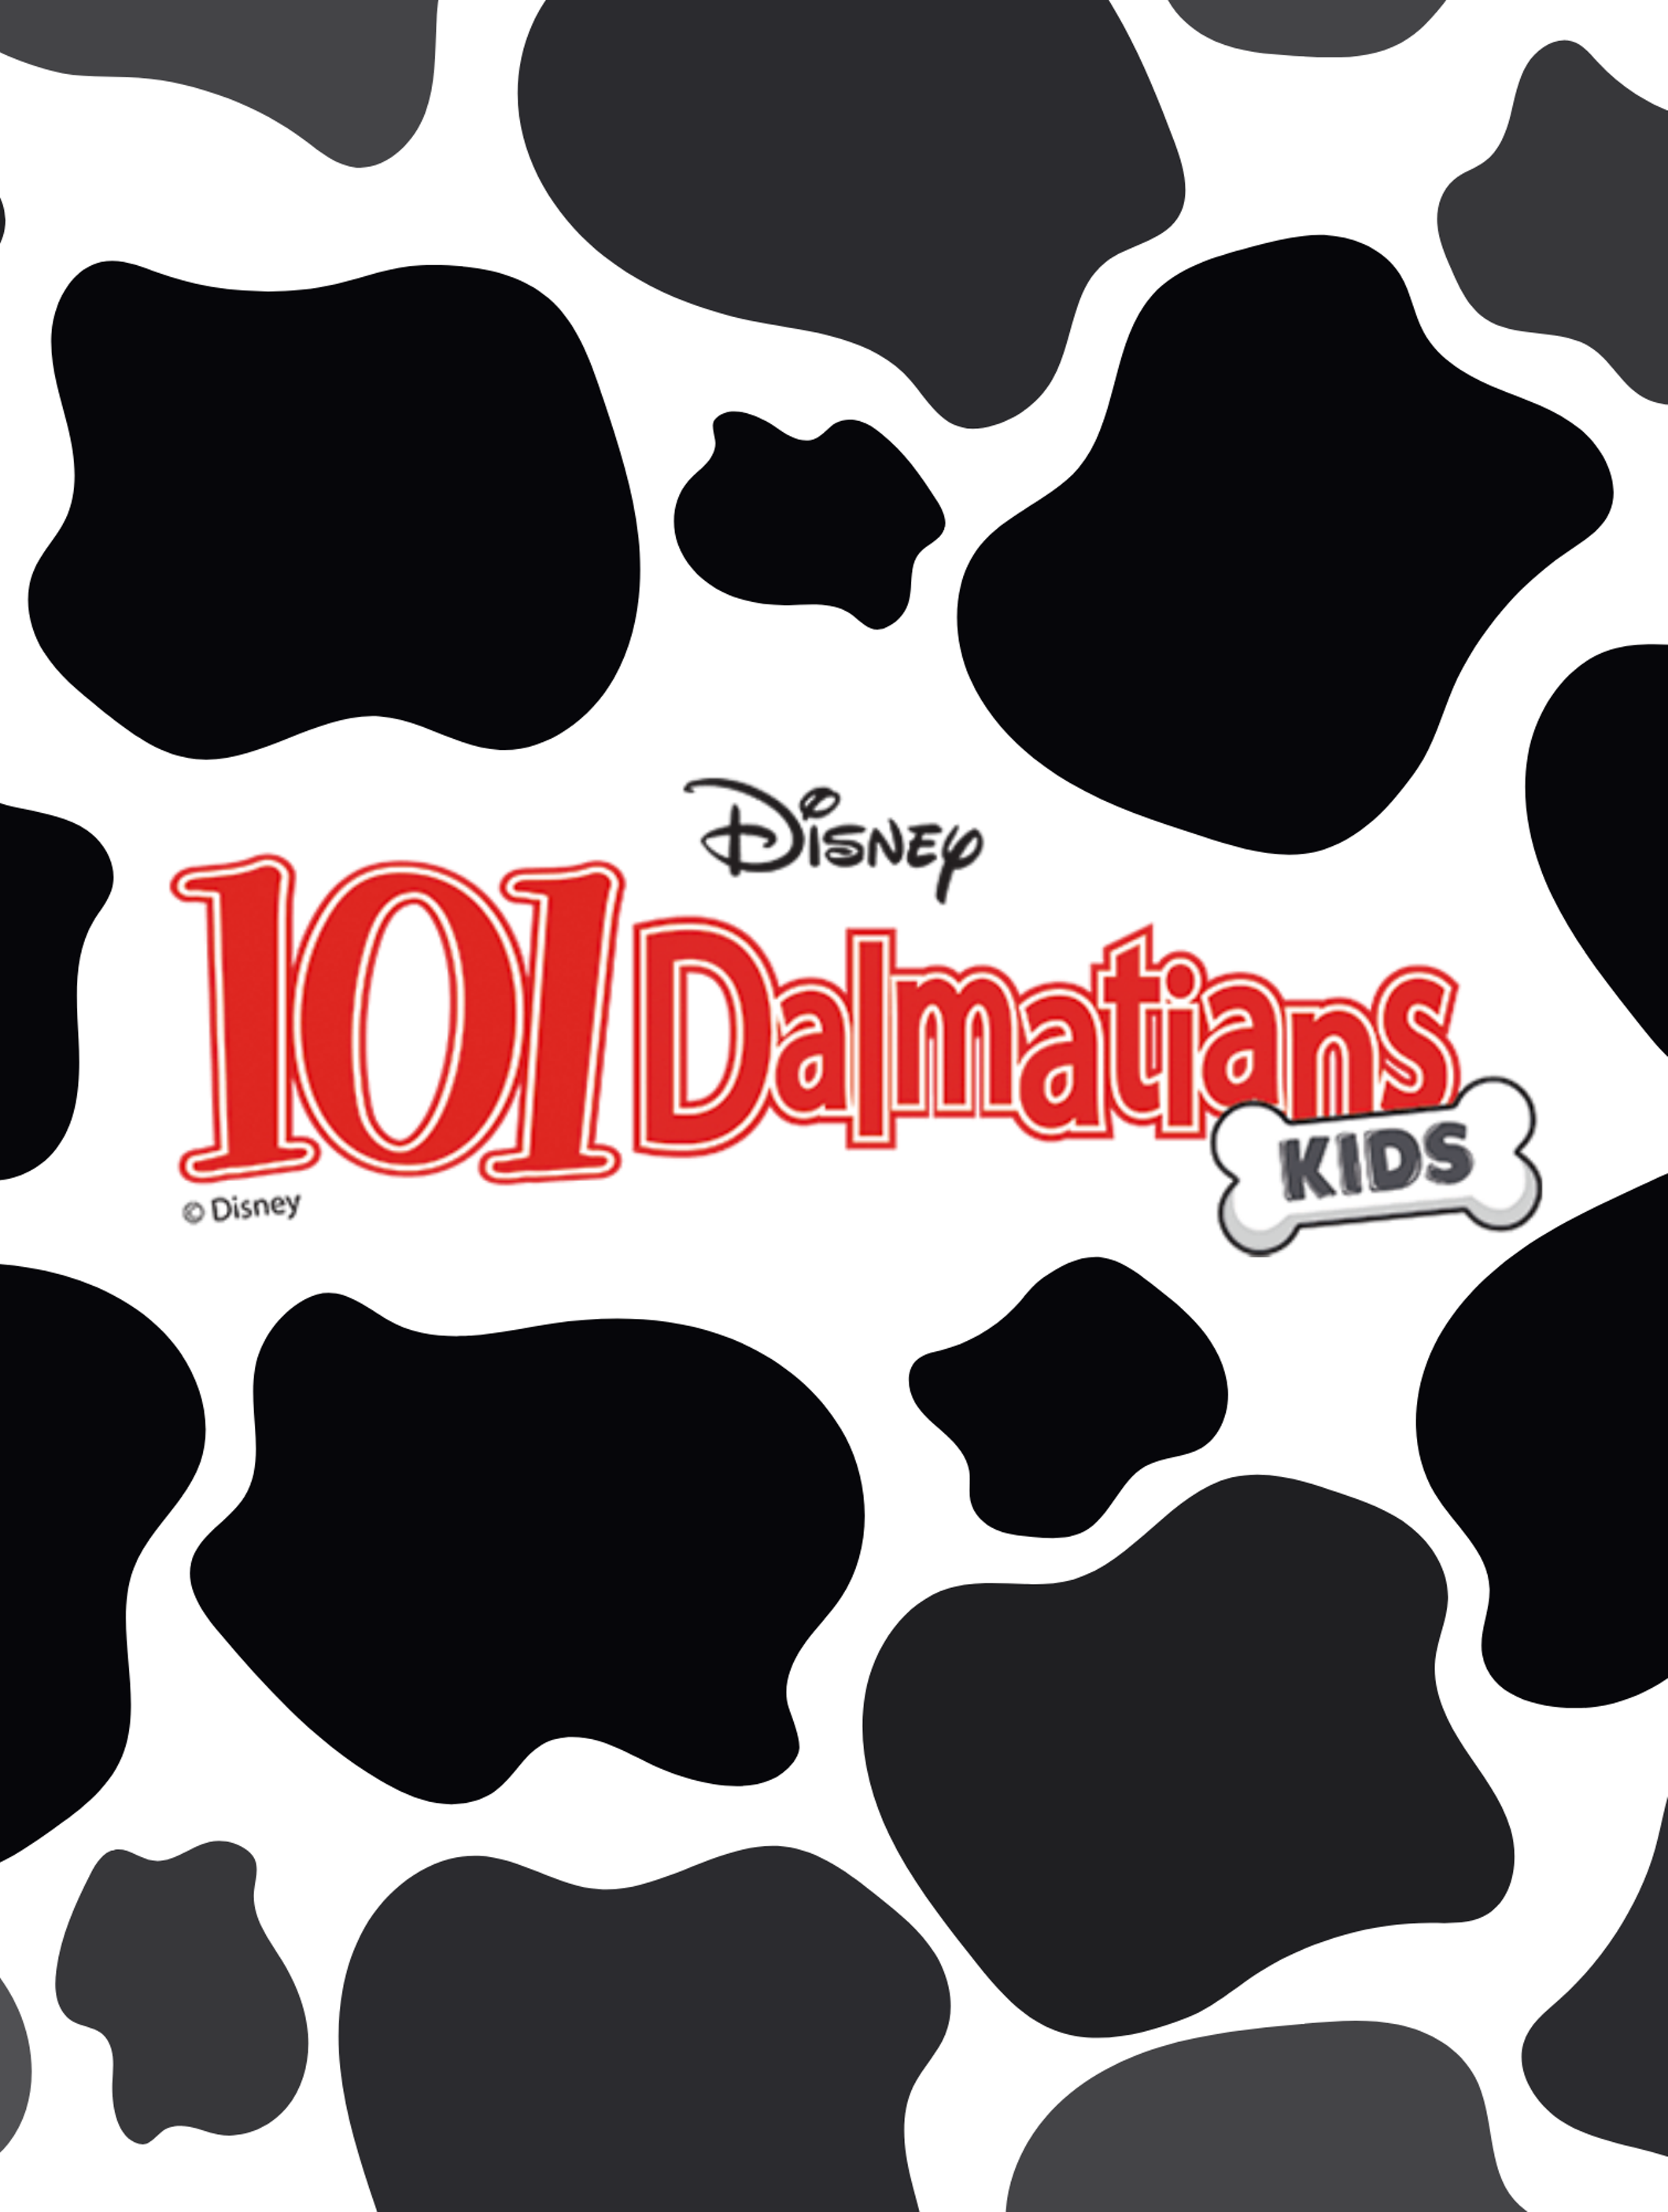 Disney's 101 Dalmatians Kids